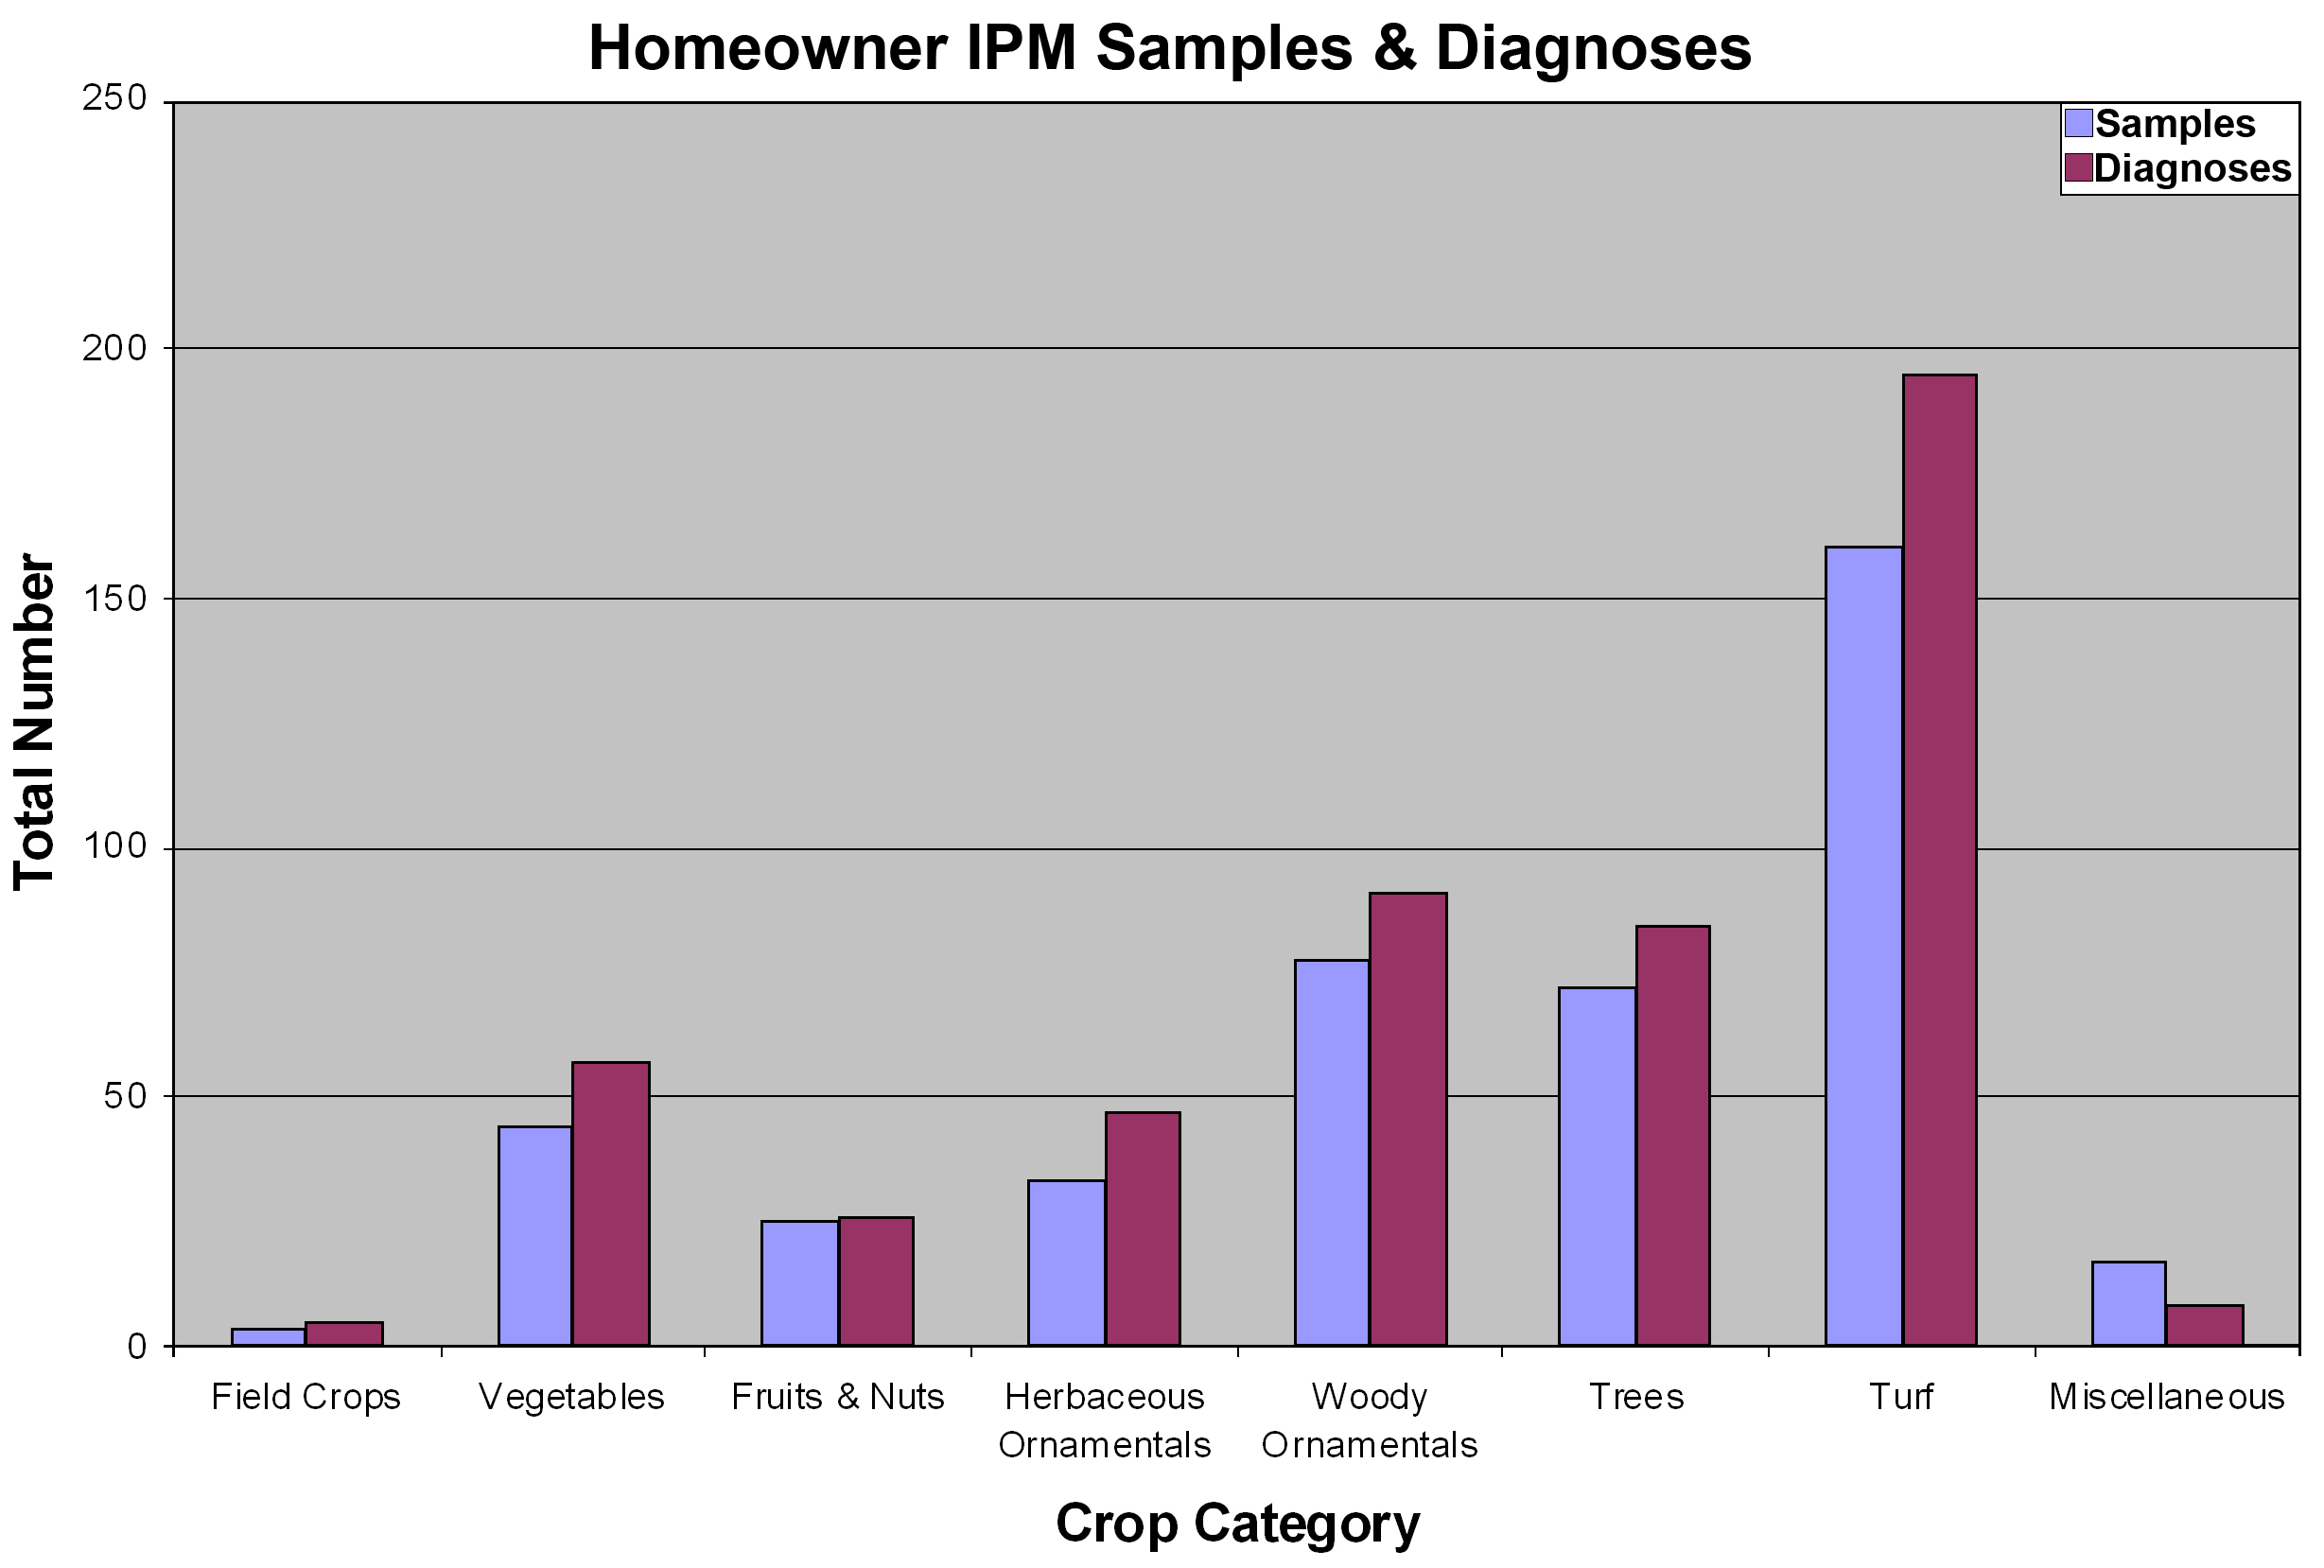 Homeowner IPM Samples & Diagnoses